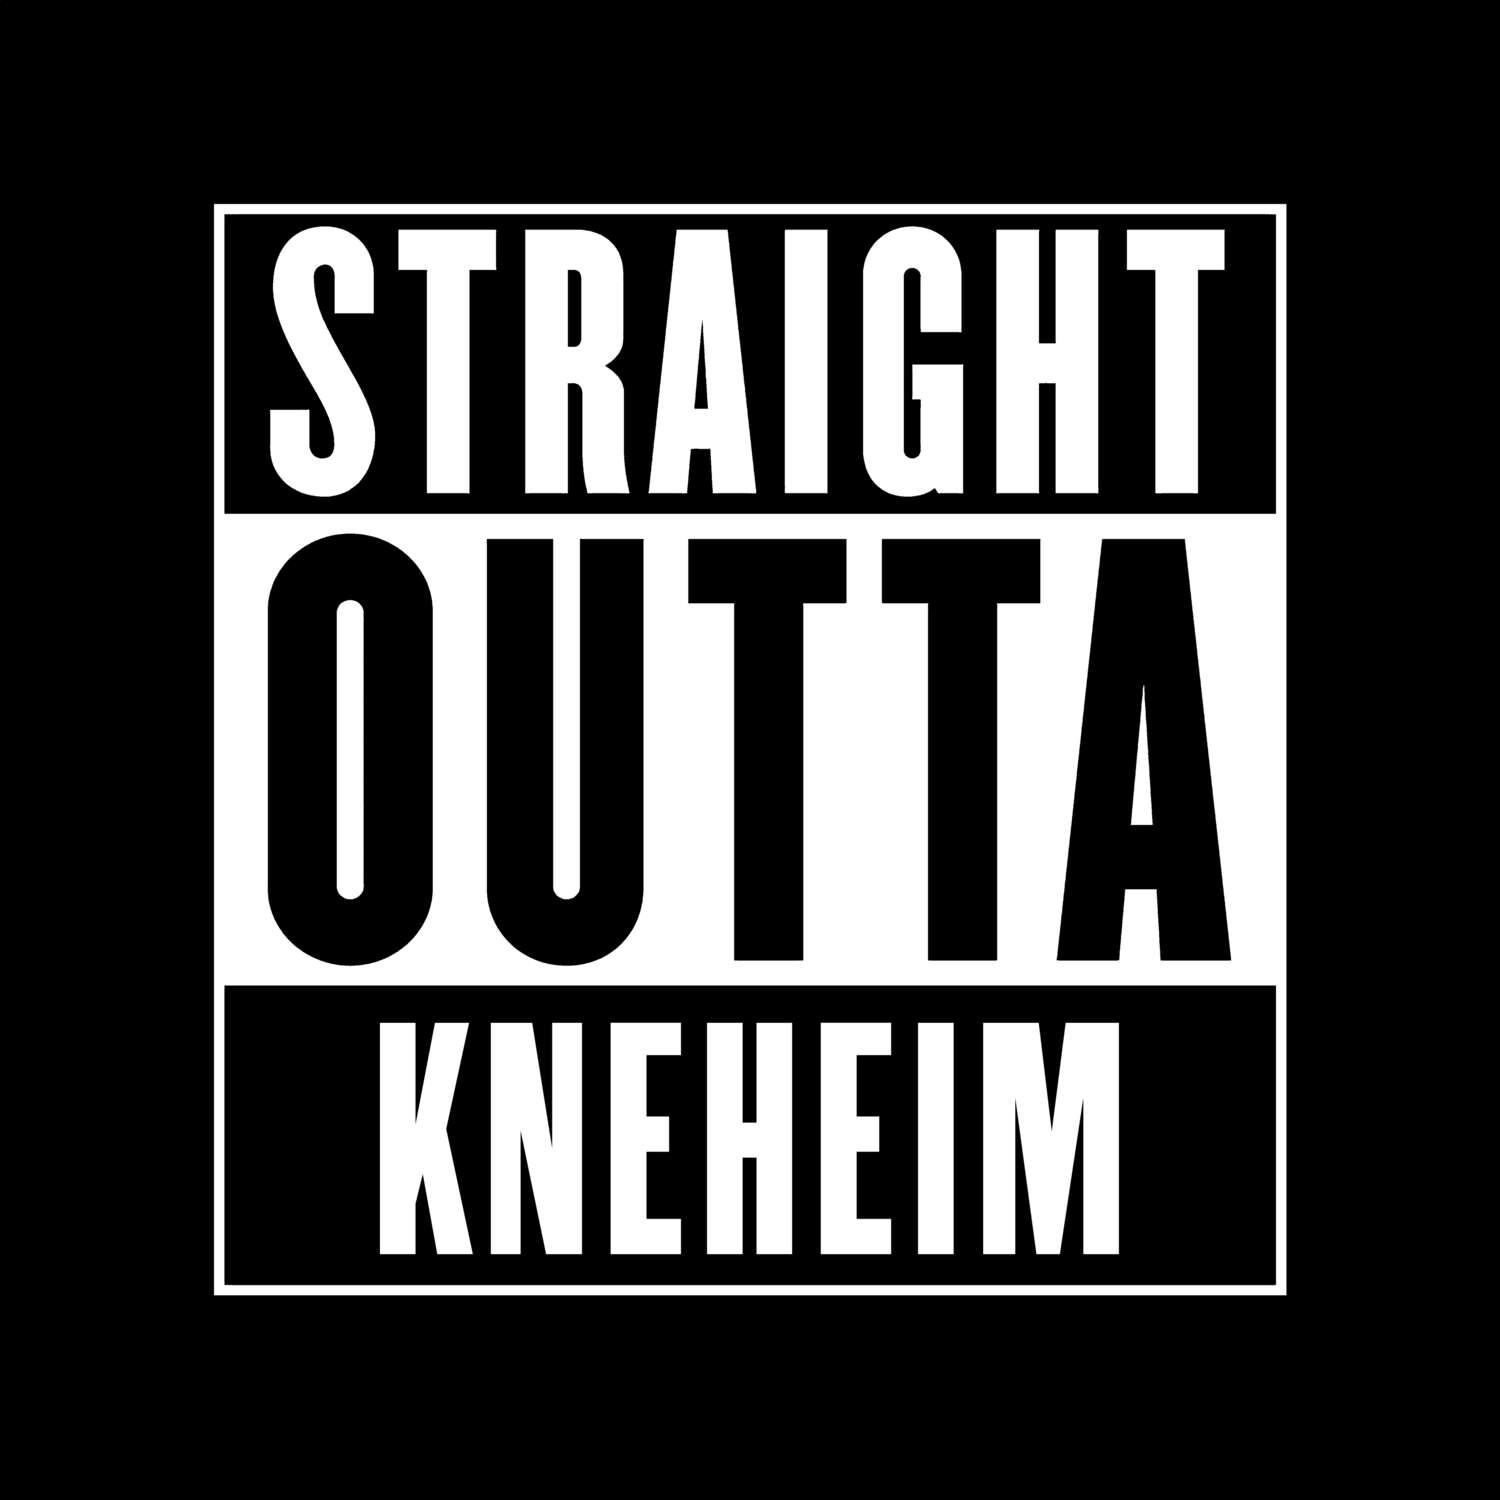 Kneheim T-Shirt »Straight Outta«